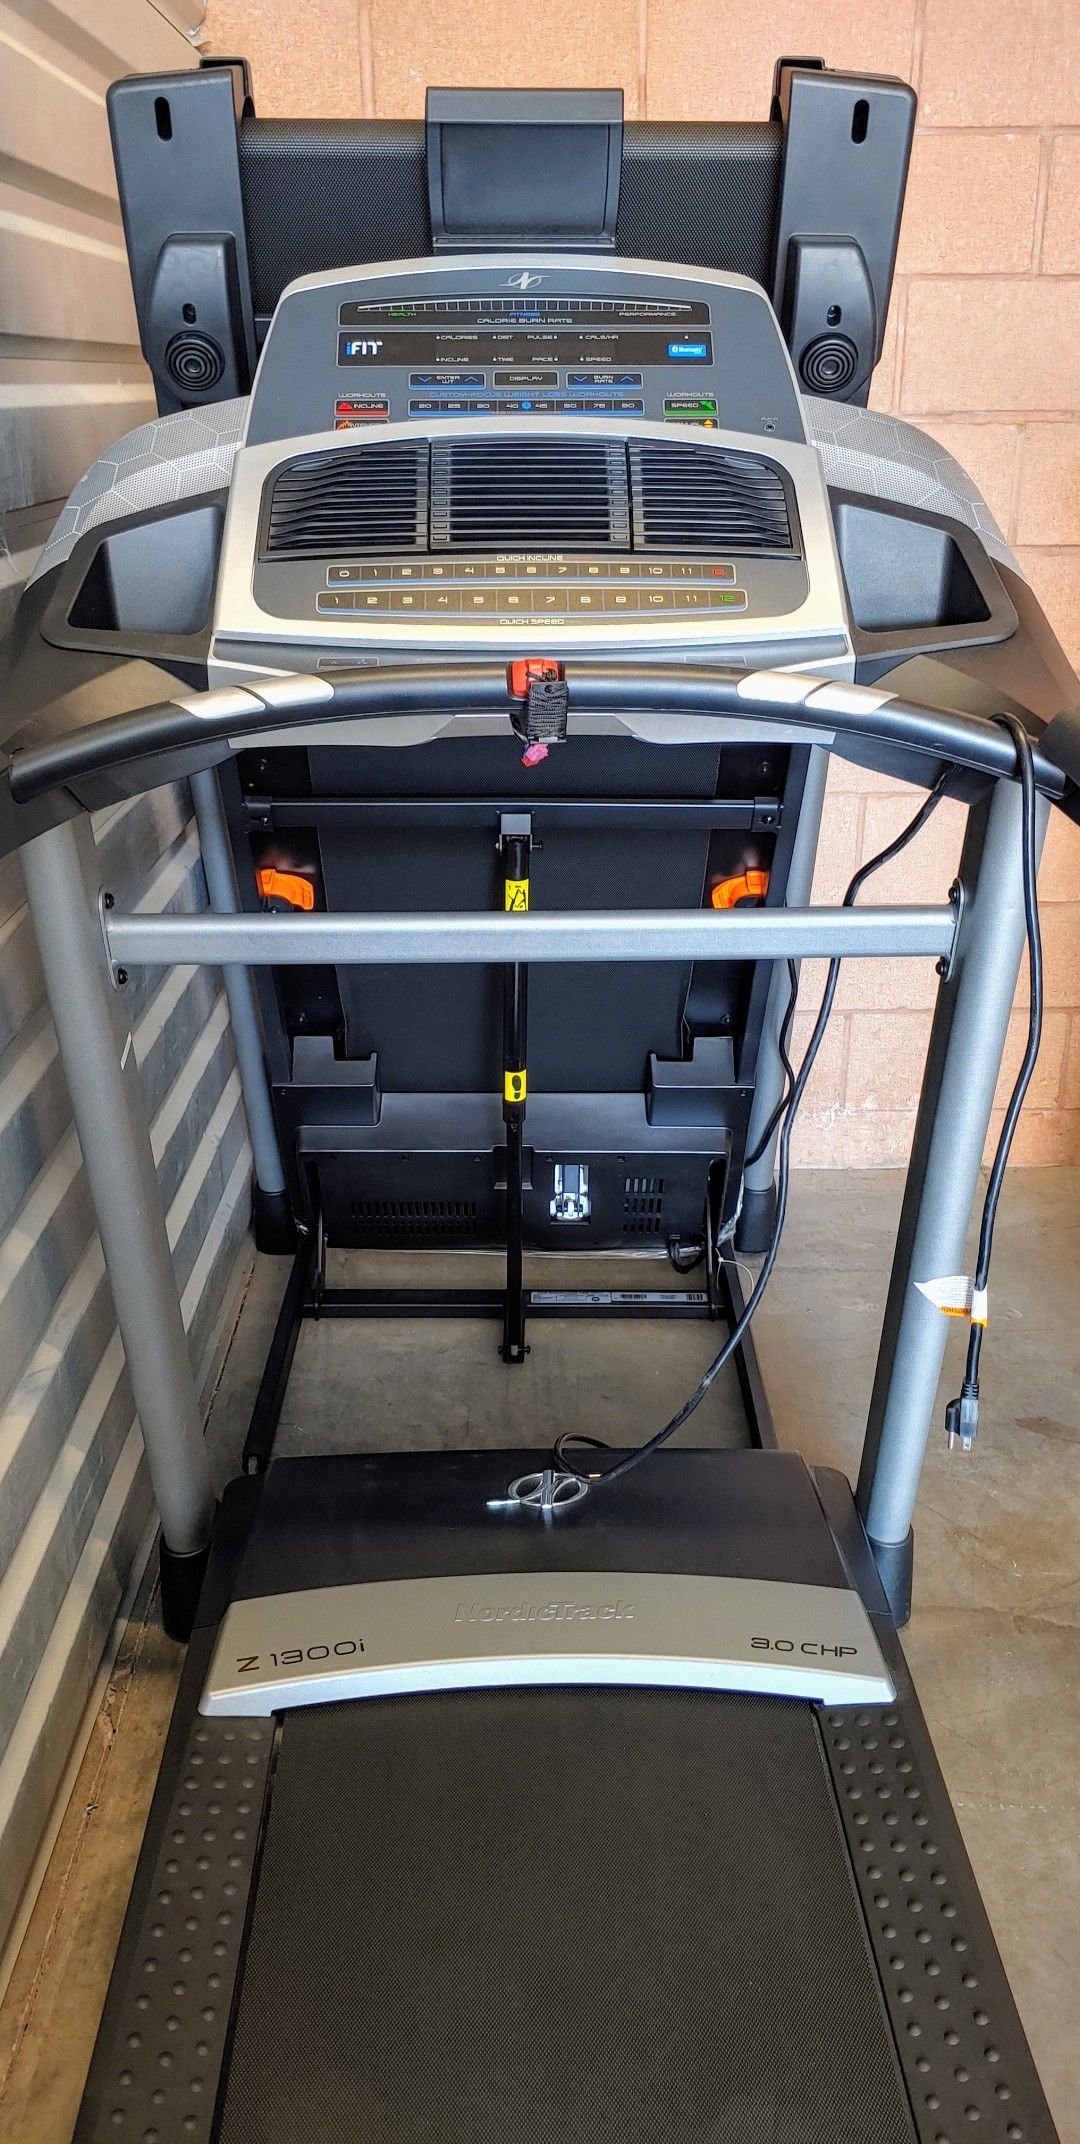 FREE DELIVERY 💥 NordicTrack Z 1300i Treadmill Treadmills ✅ WARRANTY ➡ ProForm RETAIL $1300 🚫